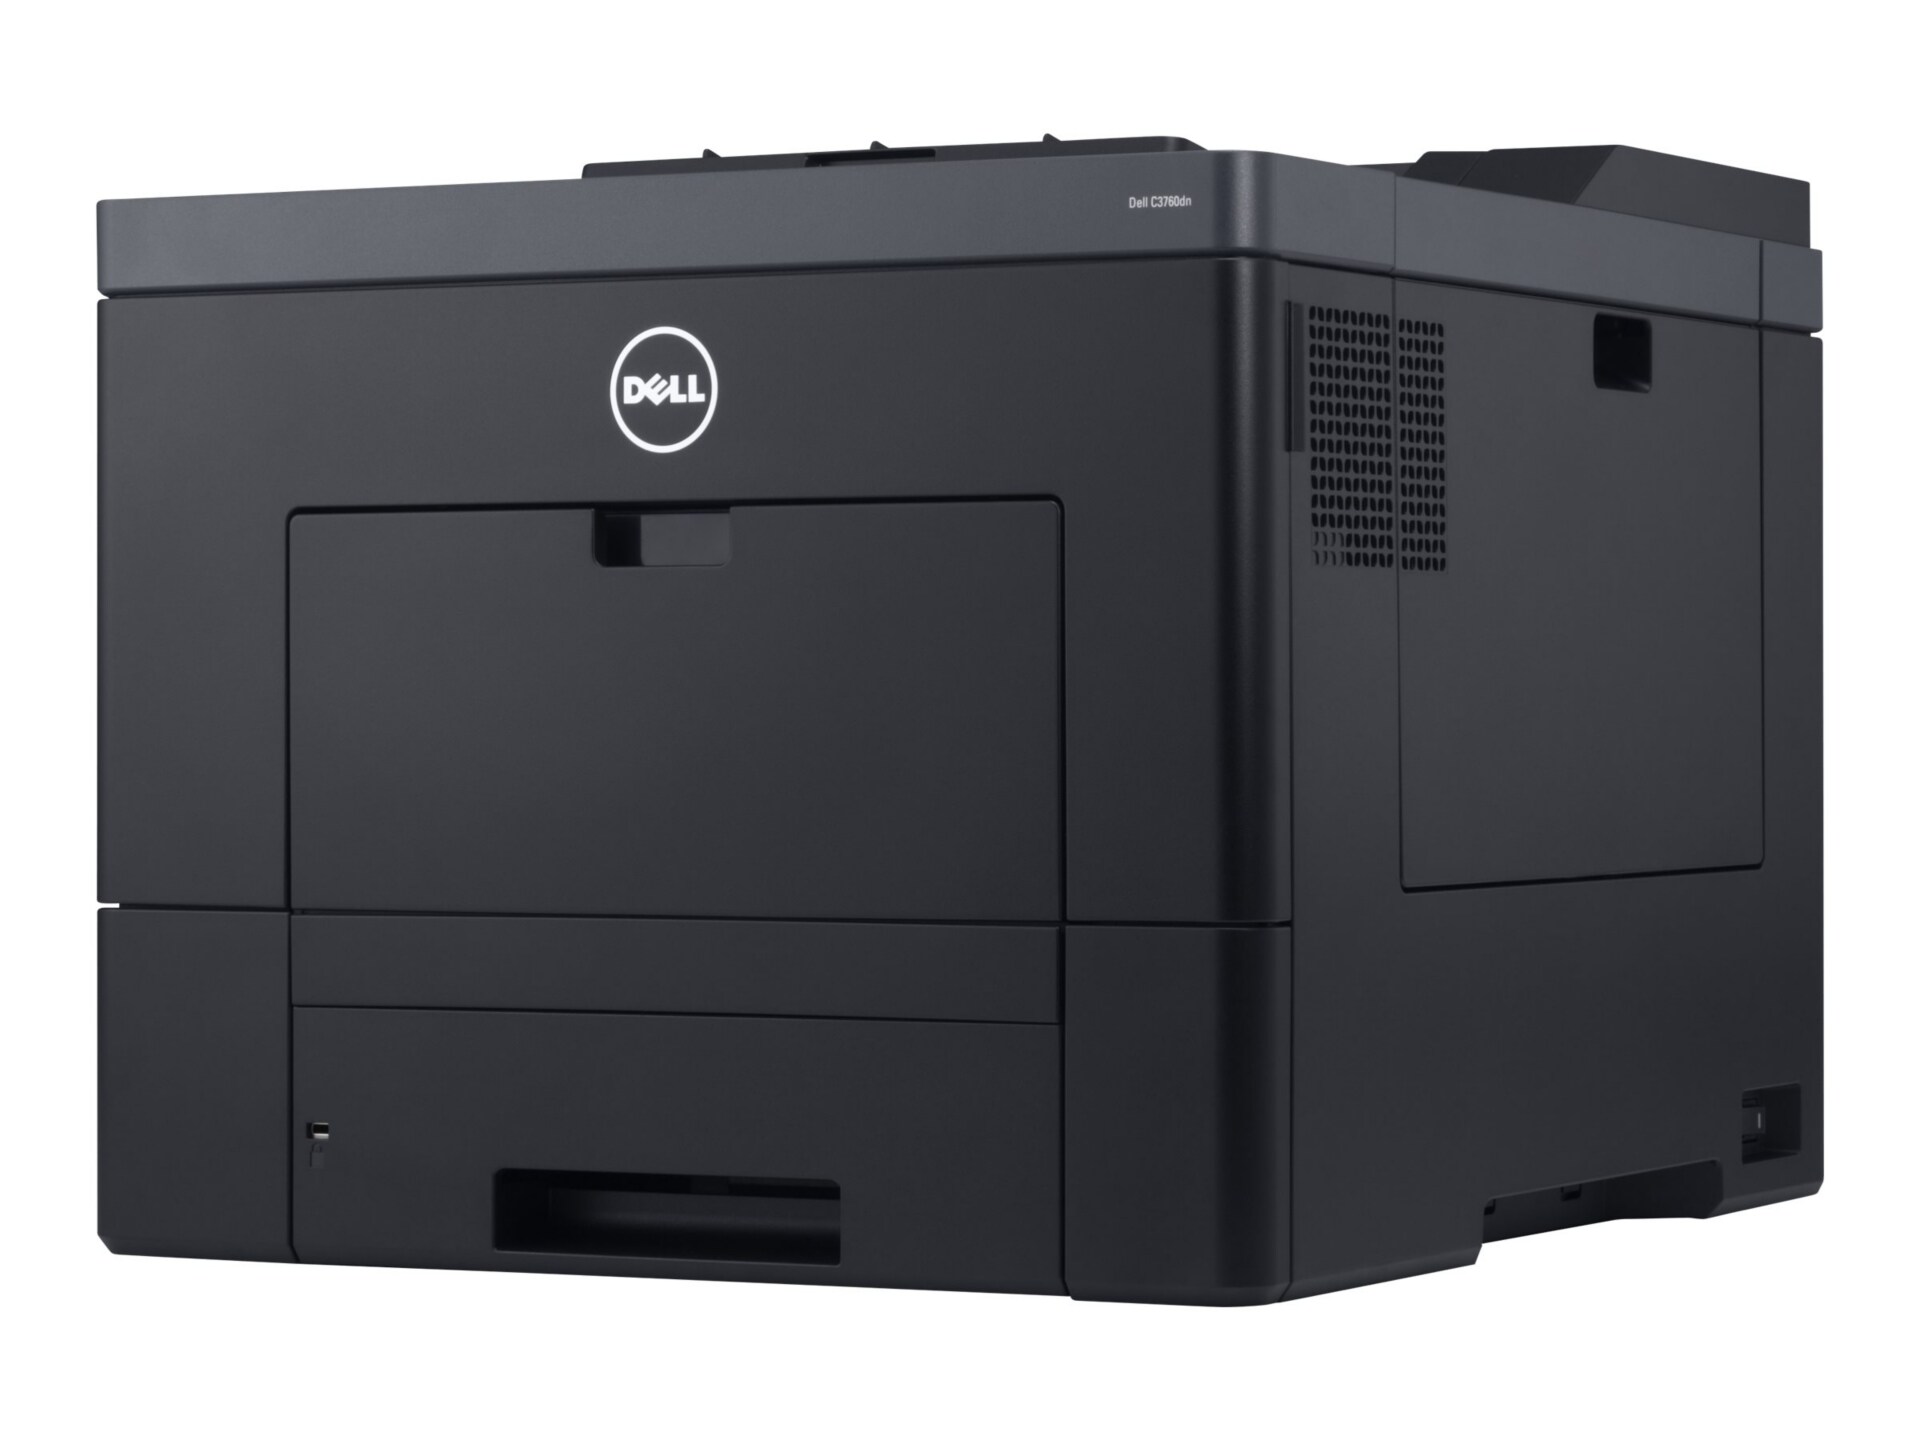 Dell Color Laser Printer C3760dn